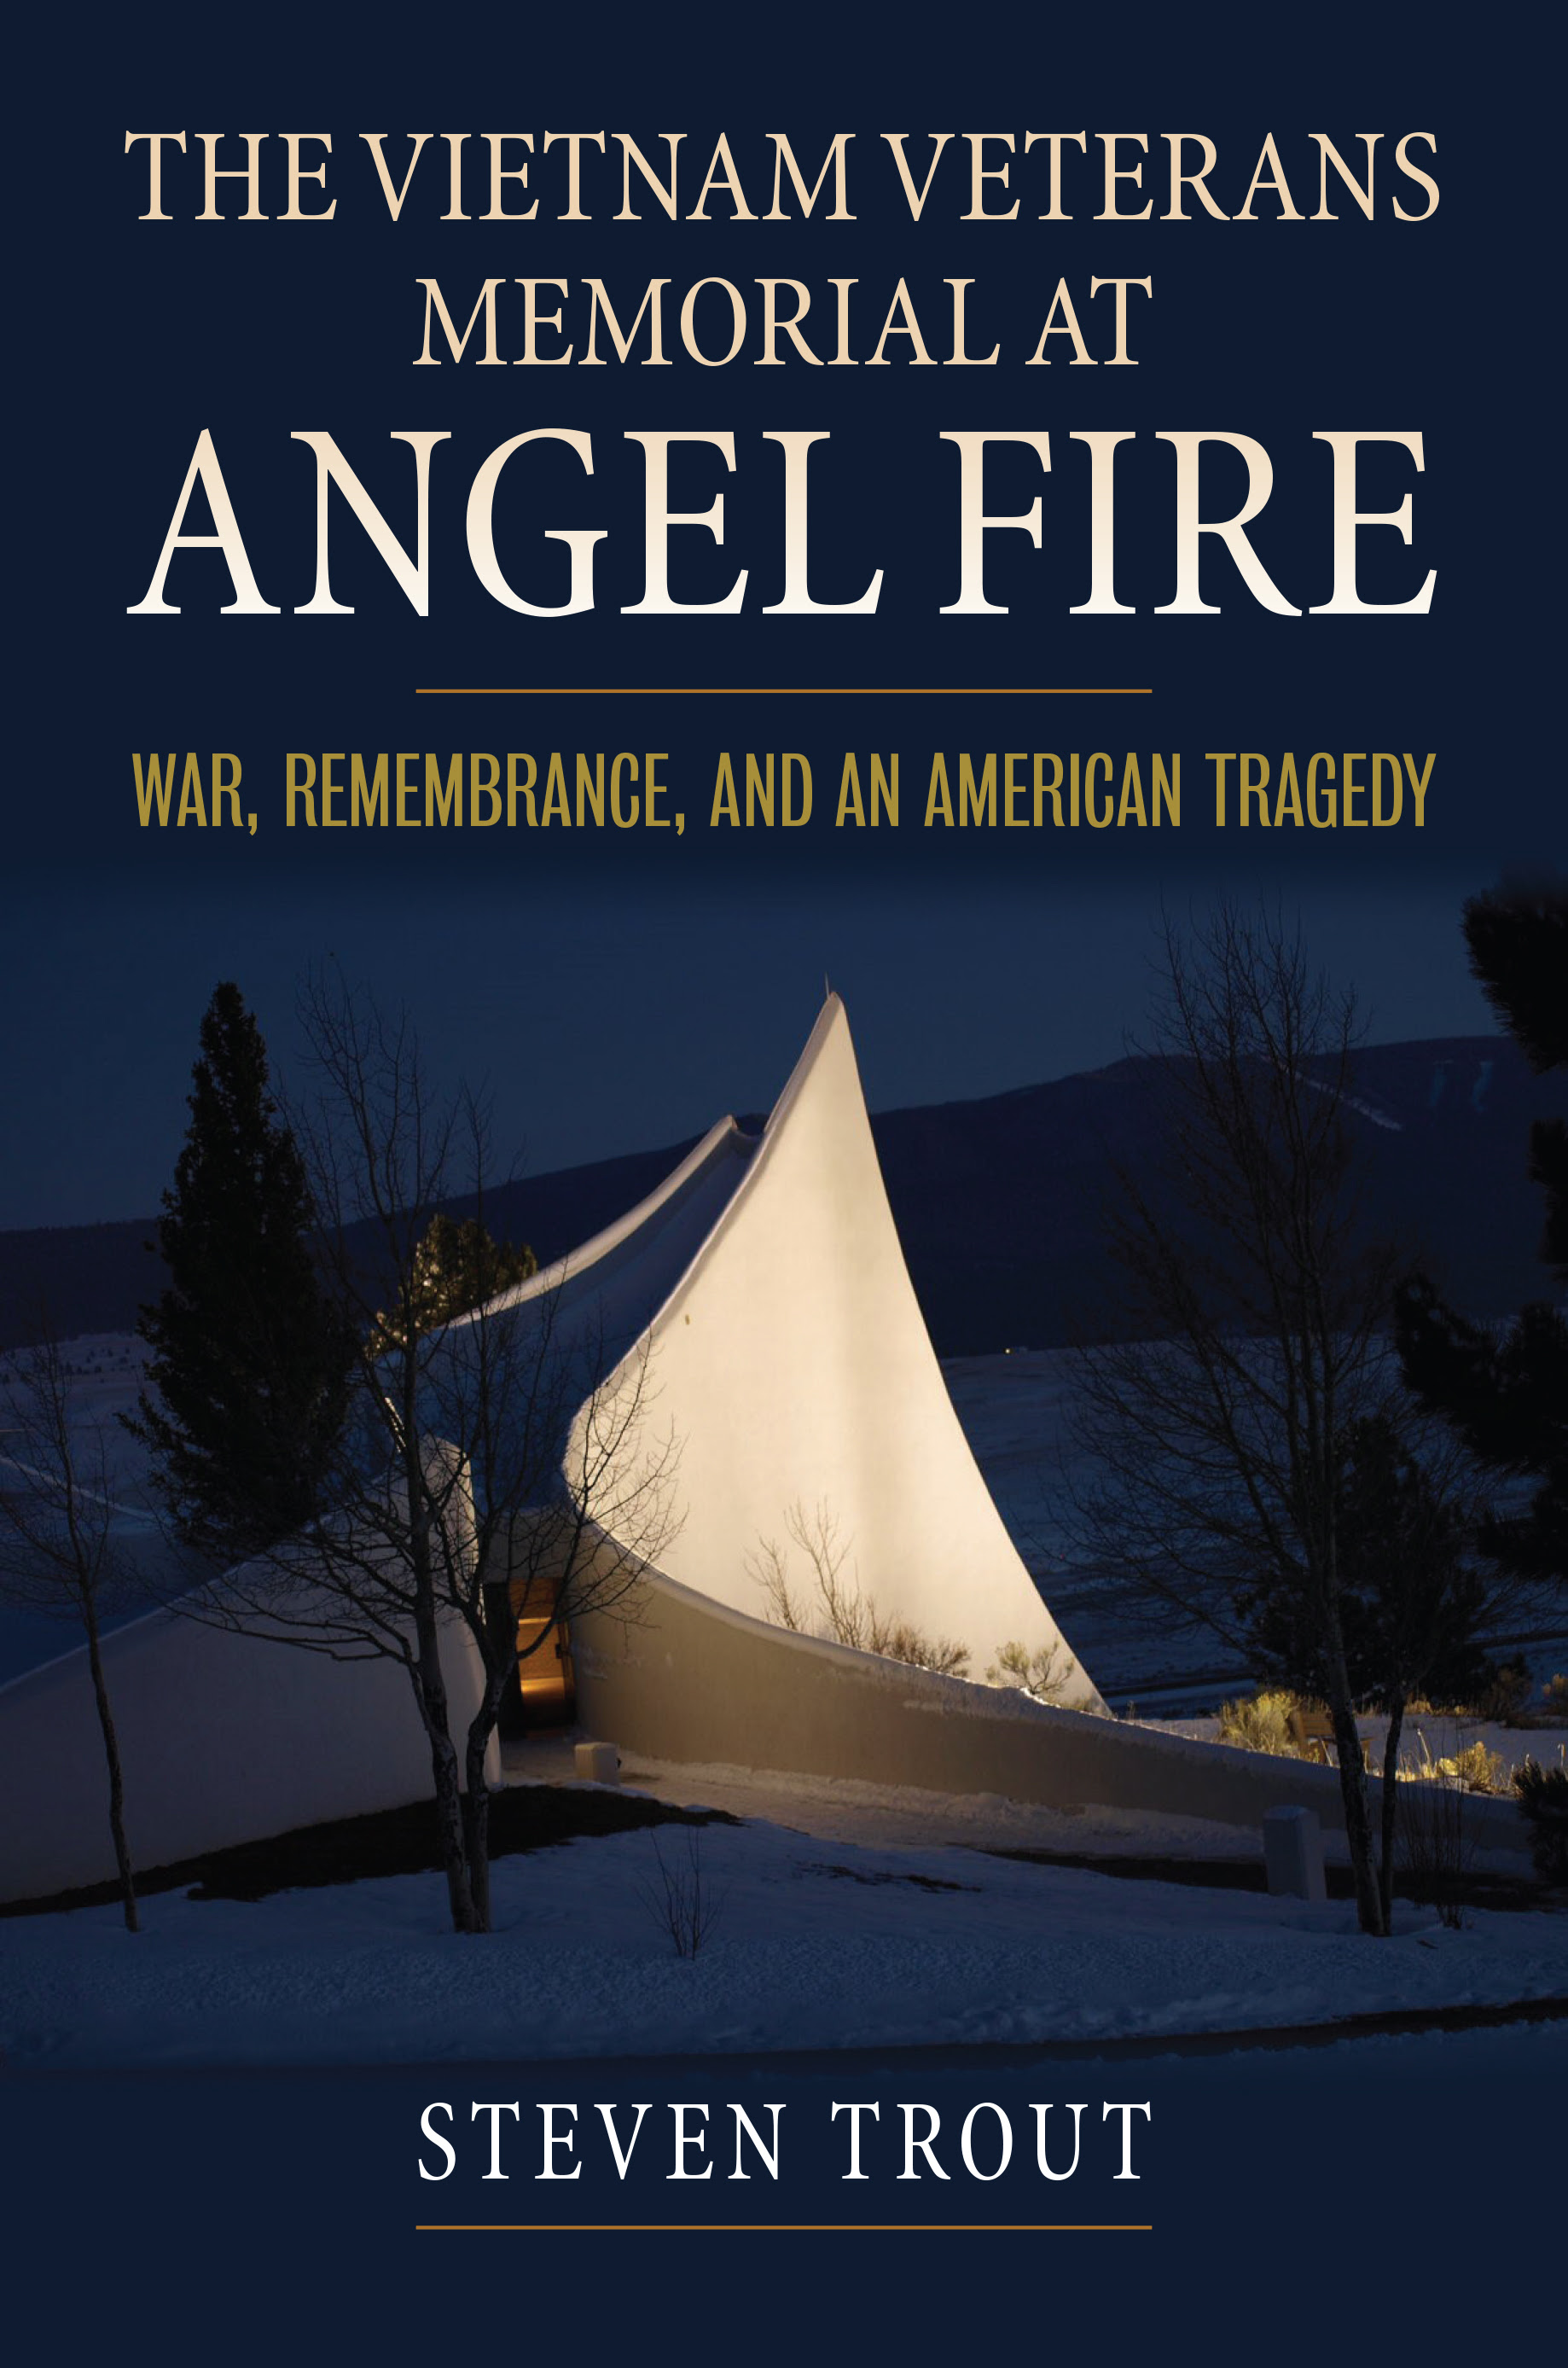 The Vietnam Veterans Memorial at Angel Fire